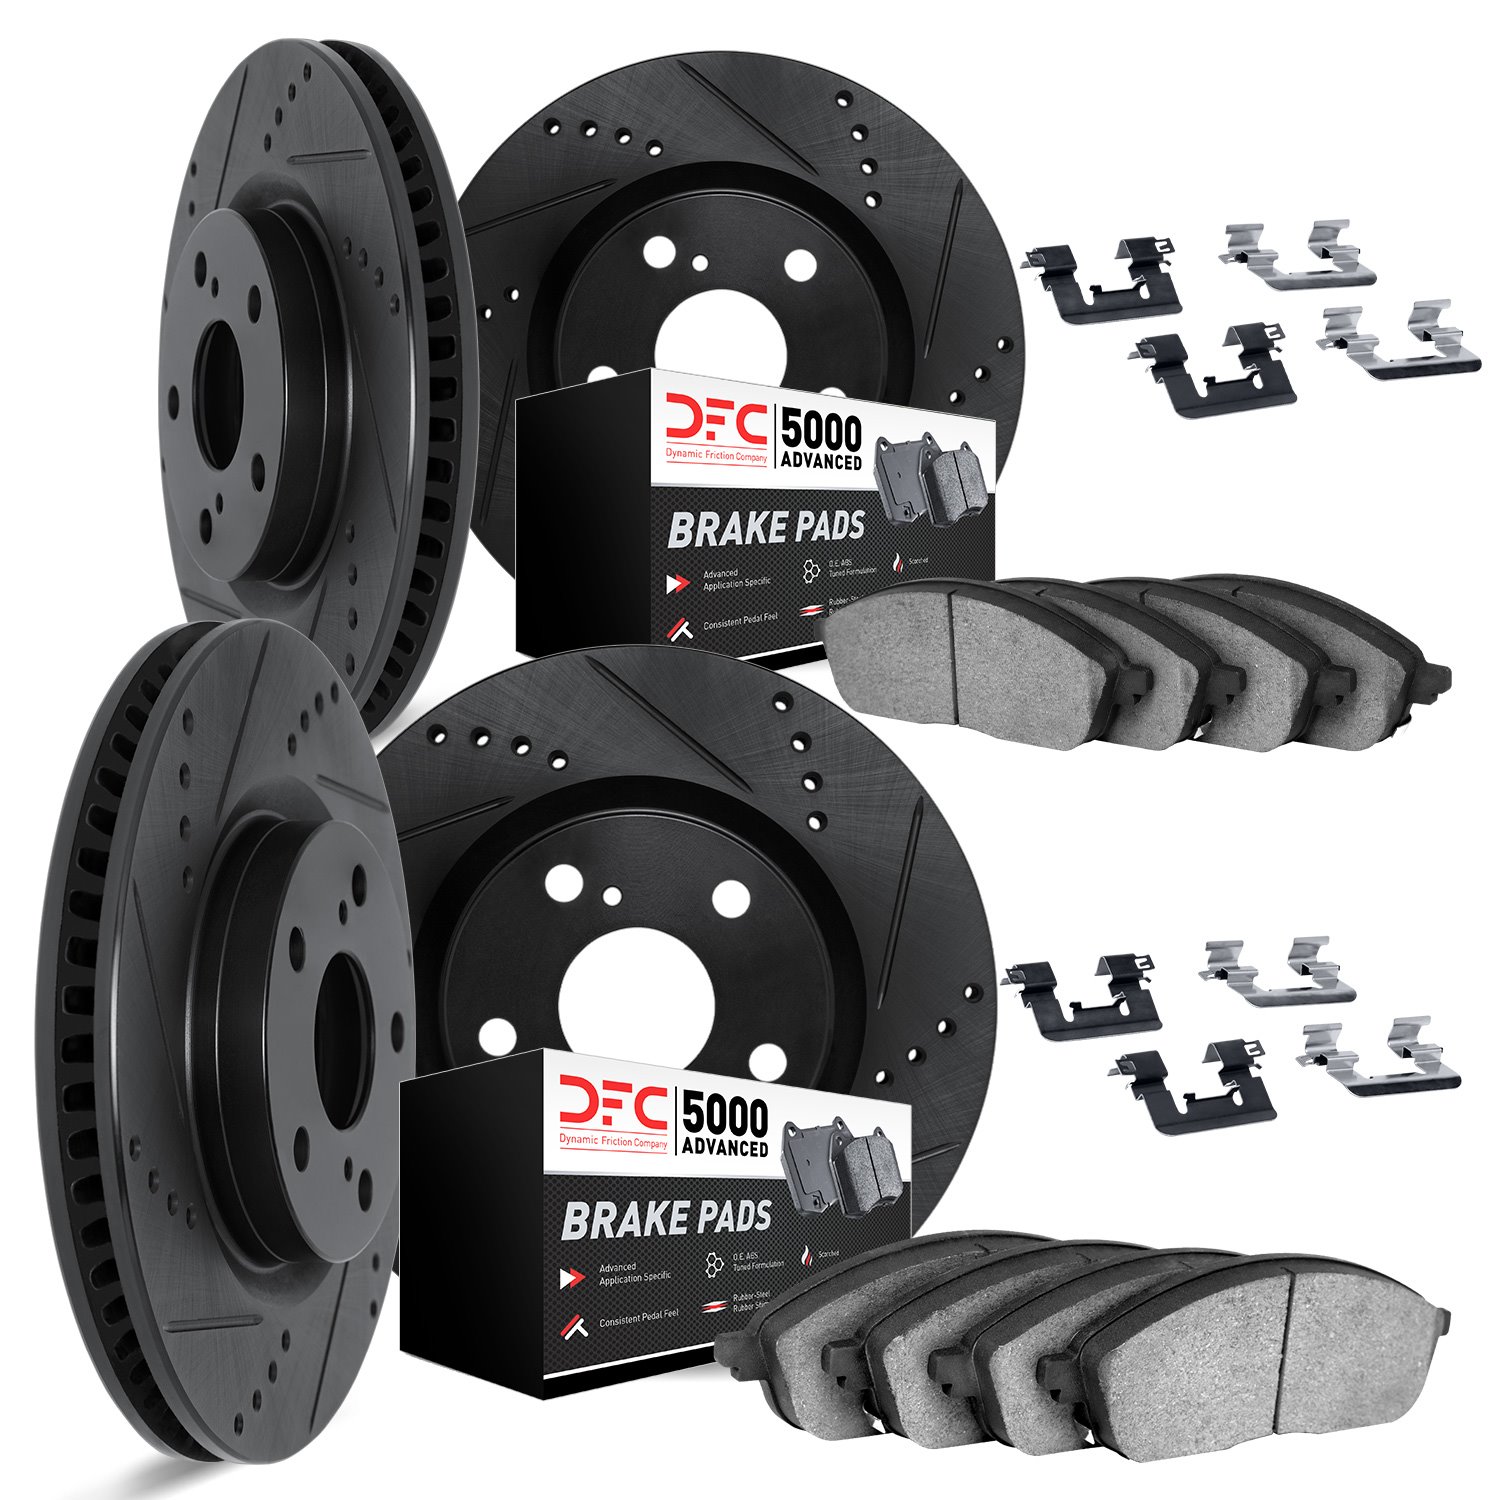 8514-68010 Drilled/Slotted Brake Rotors w/5000 Advanced Brake Pads Kit & Hardware [Black], Fits Select Infiniti/Nissan, Position